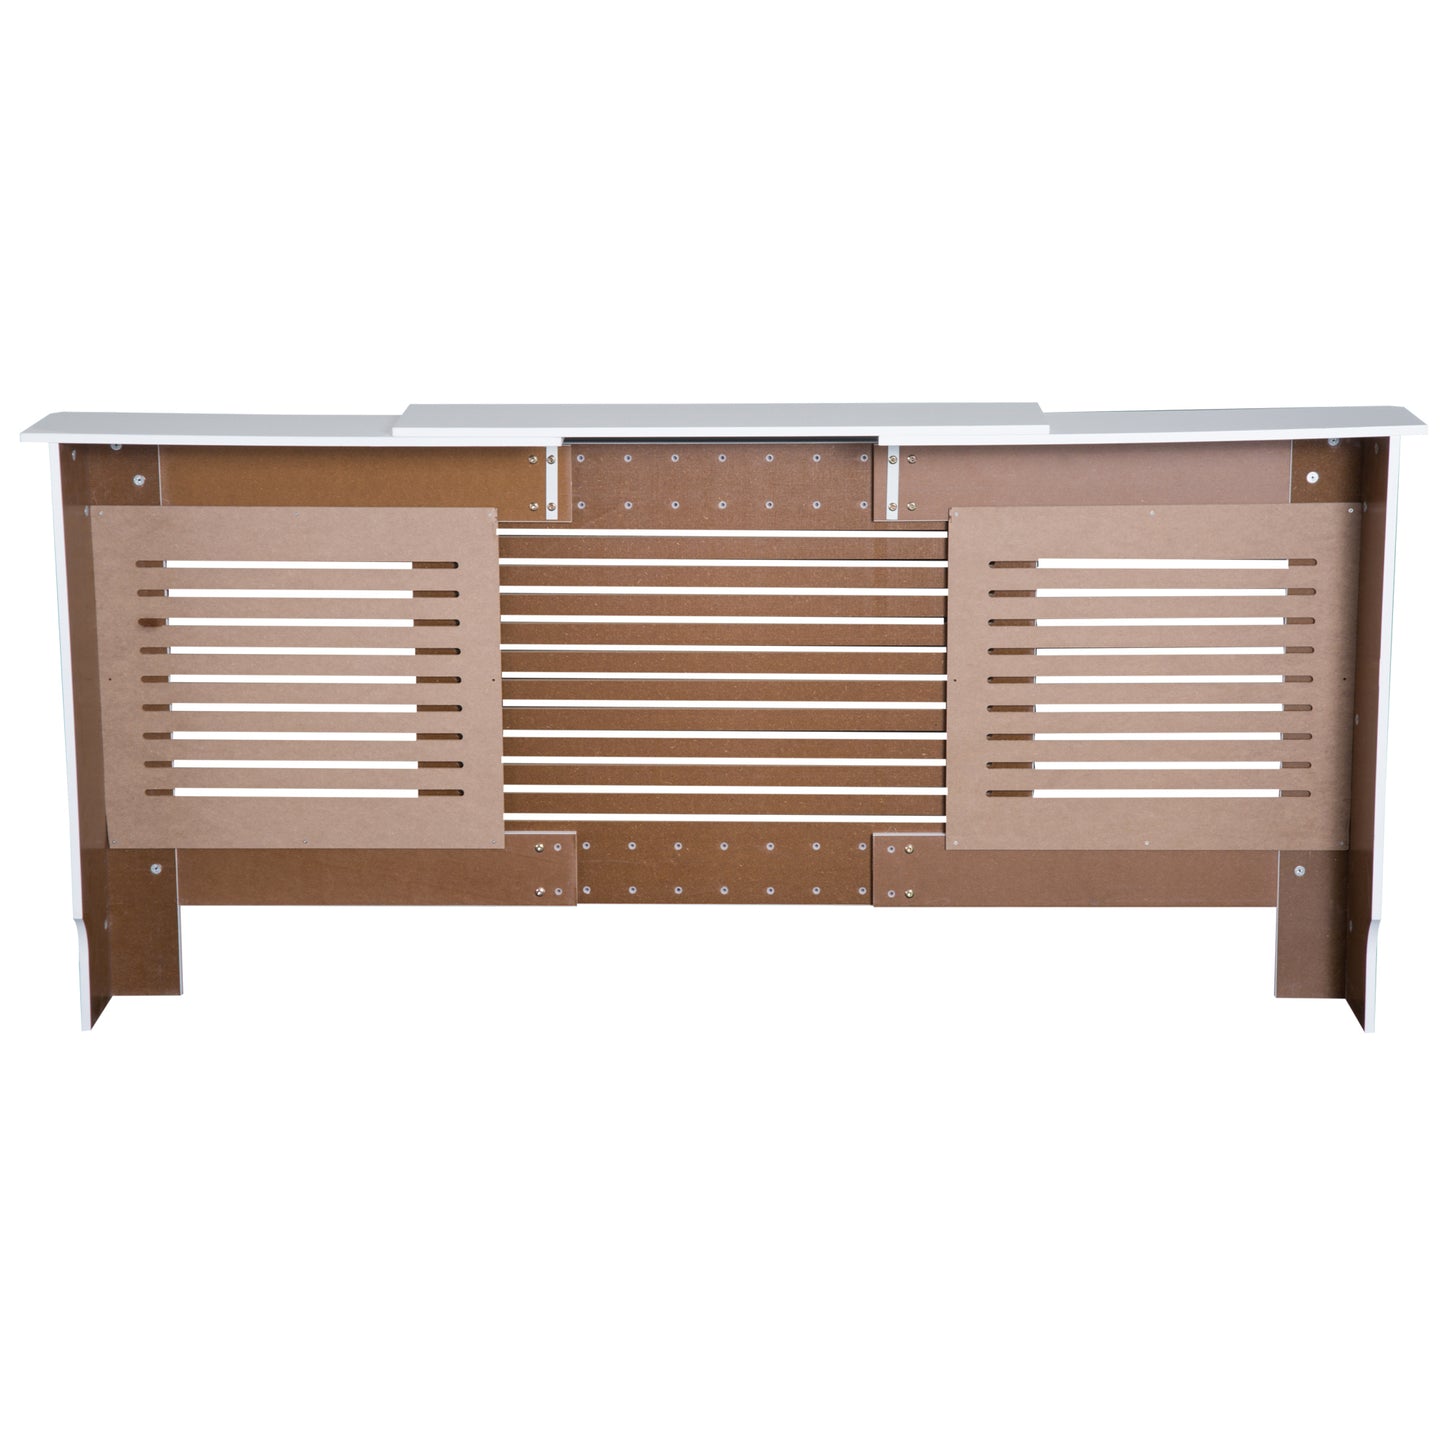 HOMCOM MDF Extendable Radiator Cover Cabinet Shelving Home Office Slatted Design White 139-208.5L x 20.5W x 82.5H cm